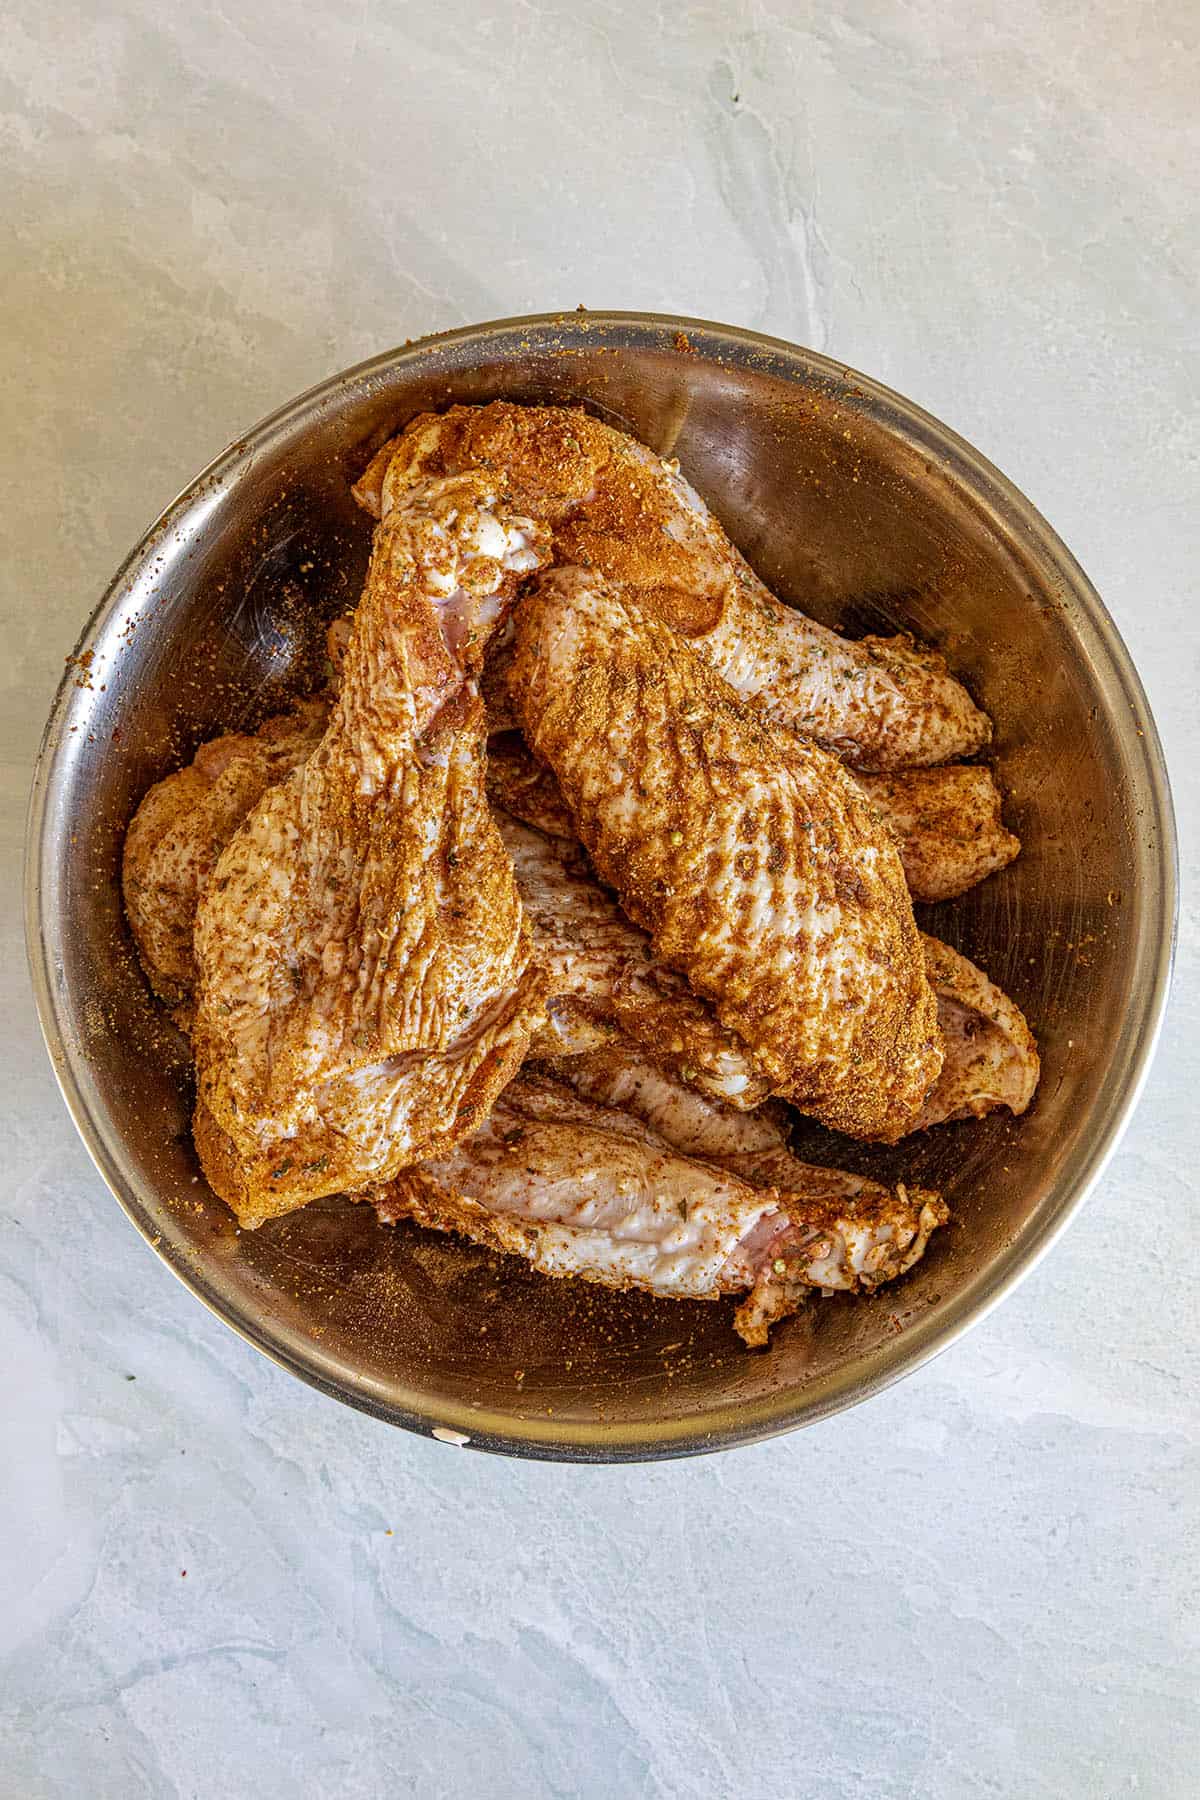 Seasoned Turkey Wings, ready for cooking